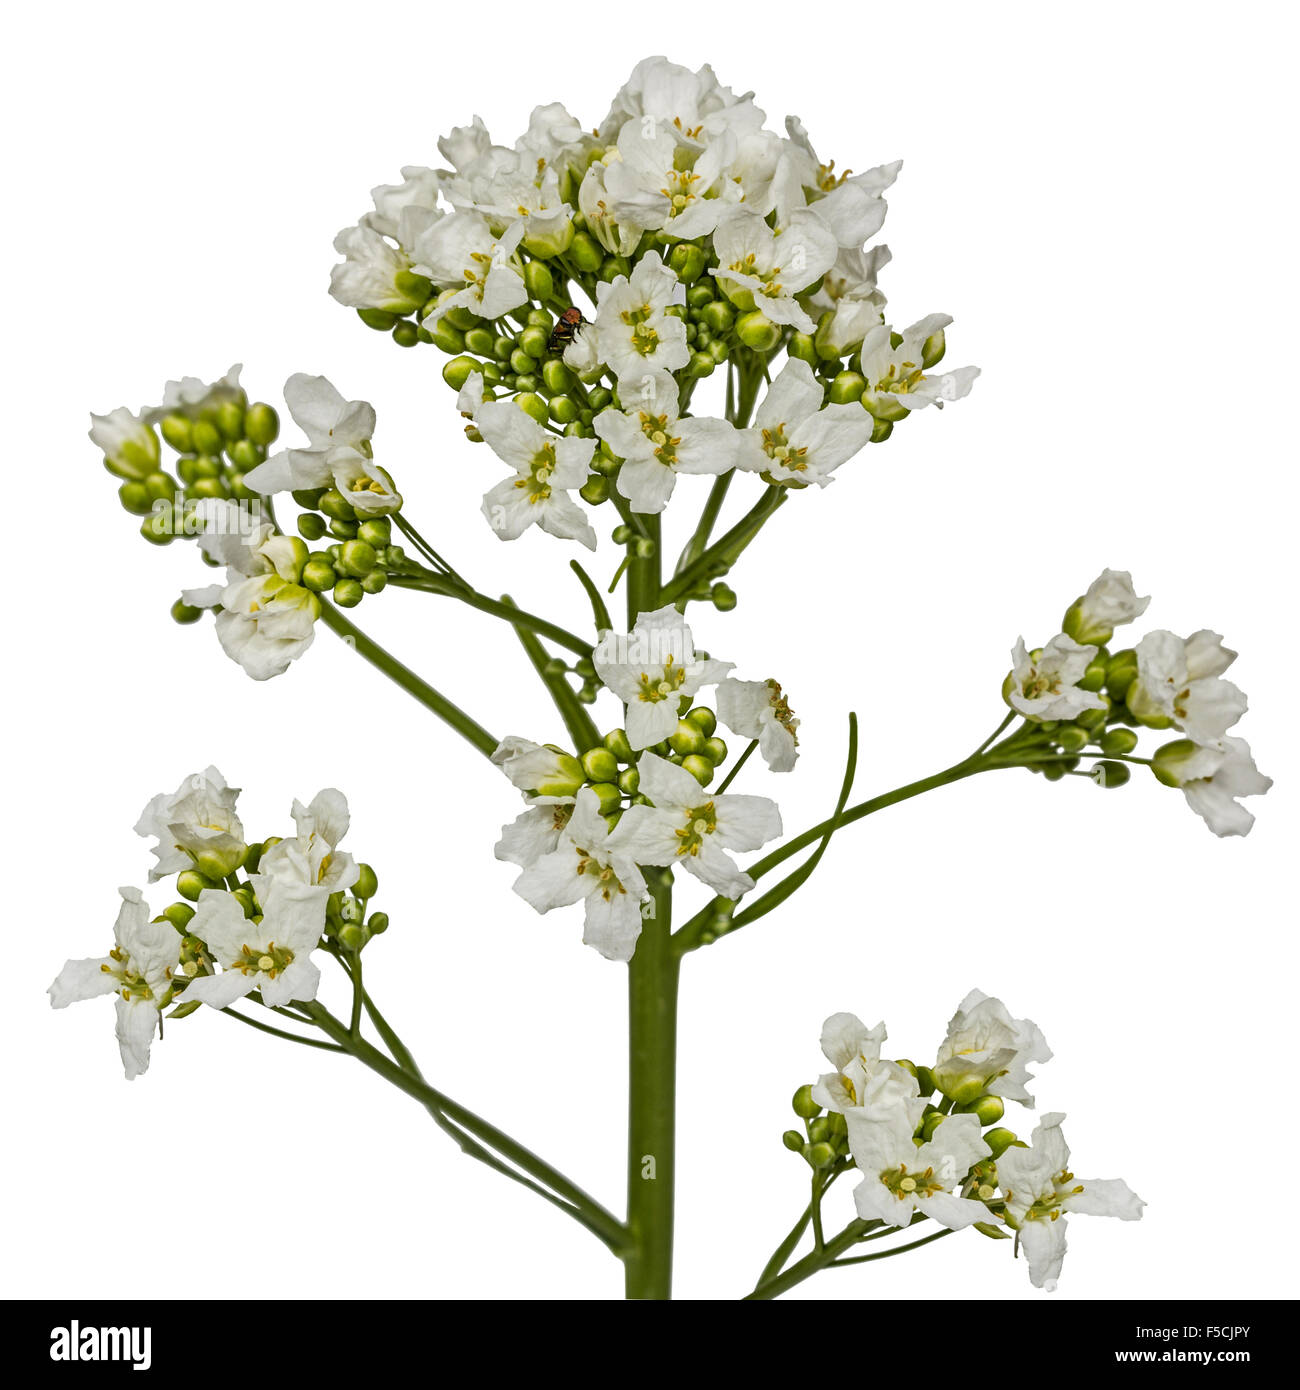 Flower horseradish (Armoracia P. Gaertn), isolated on white background Stock Photo